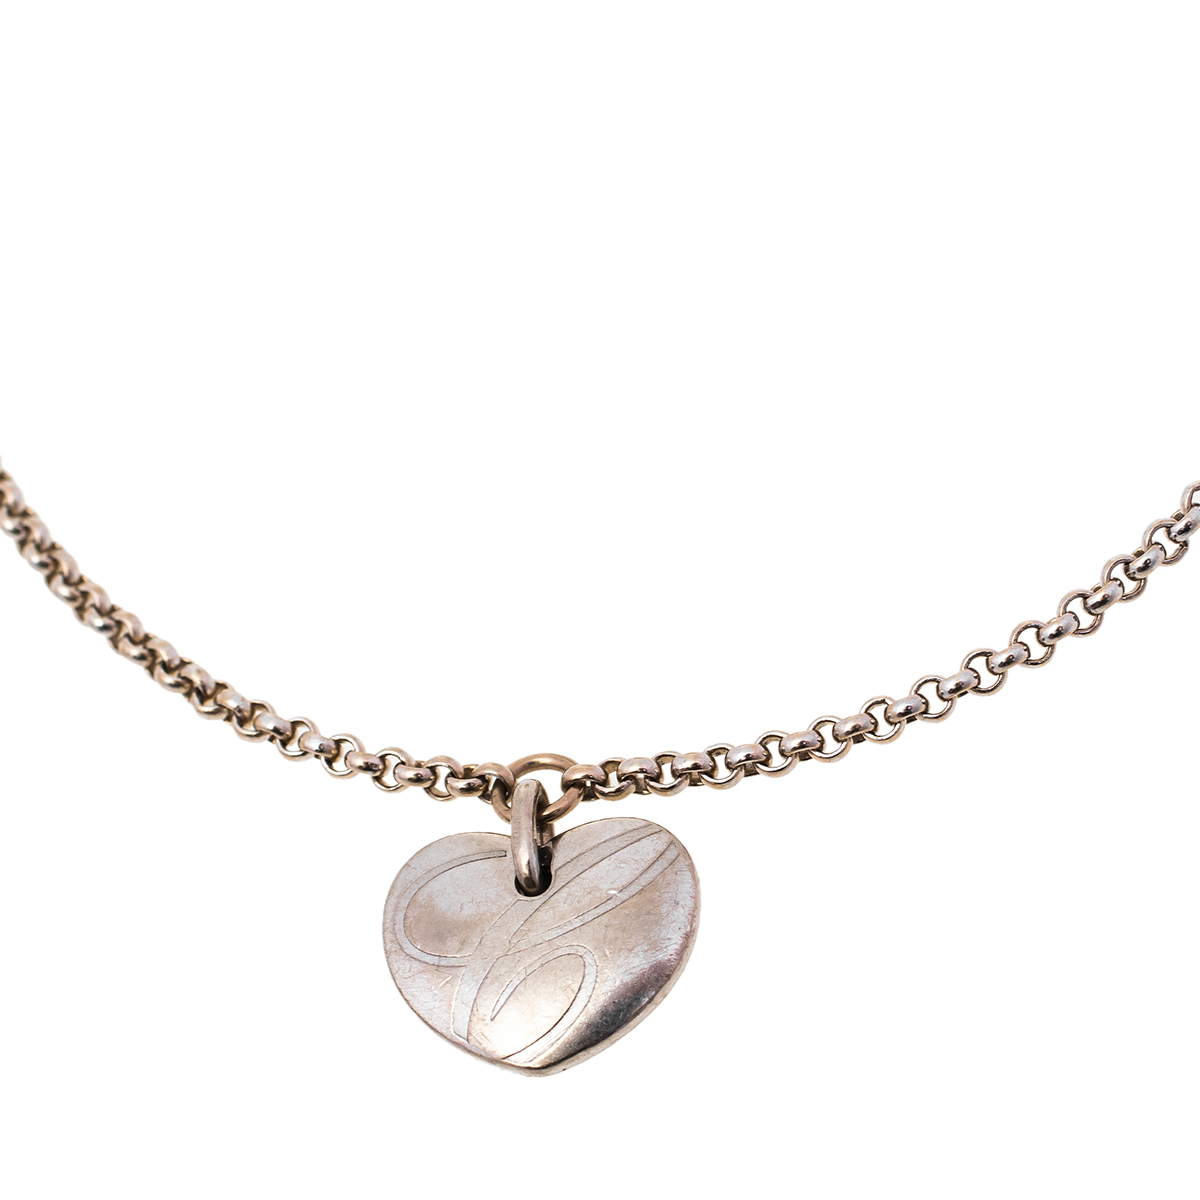 

Chopard Chopardissimo 18K White Gold Heart Charm Bracelet